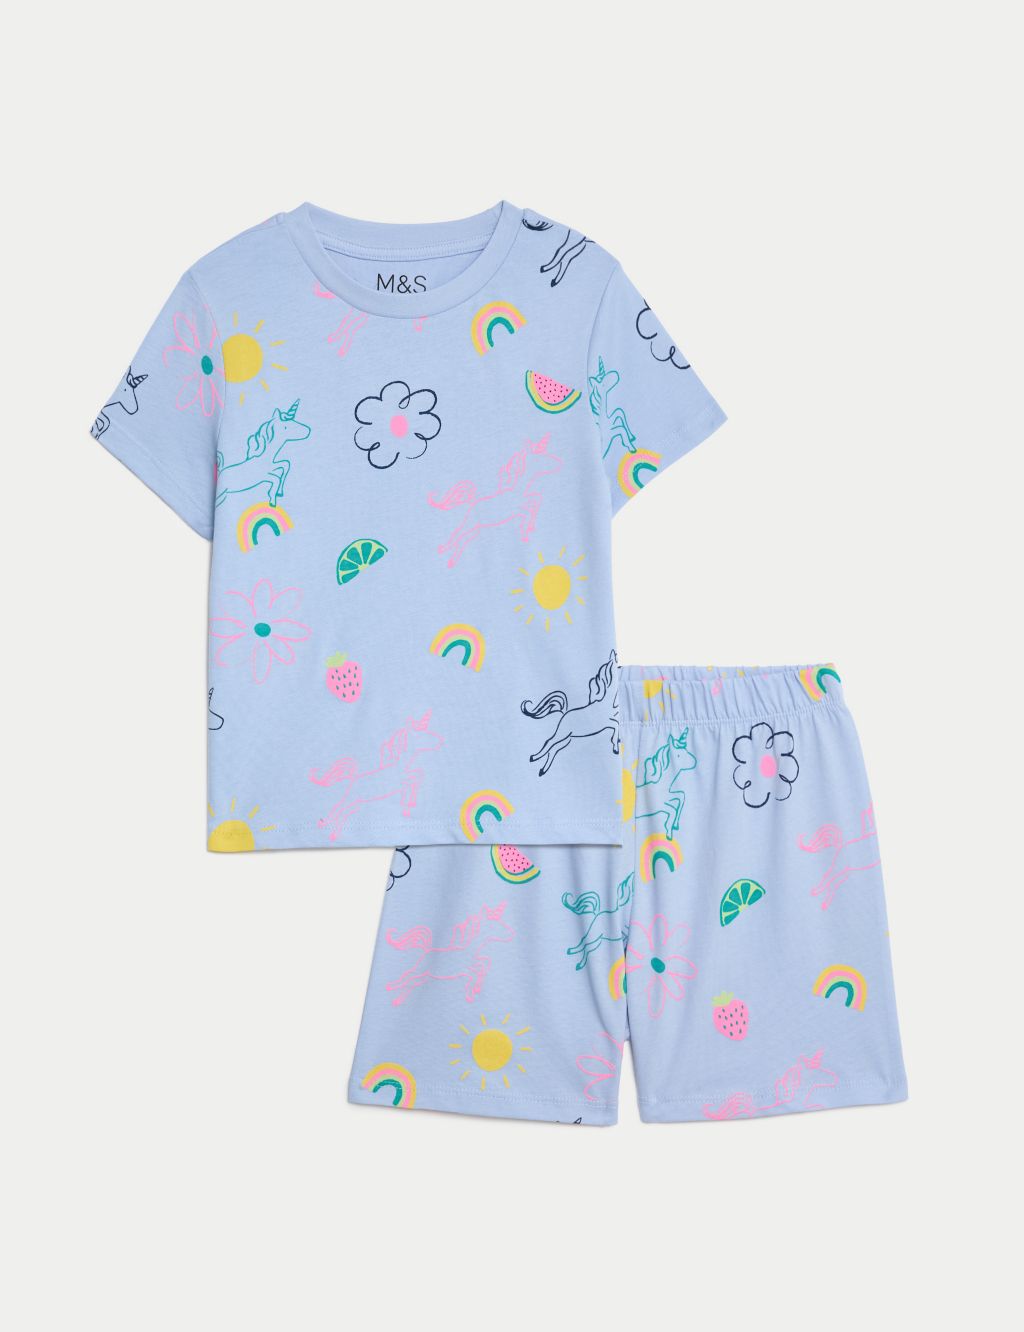 Teen Ren's Pyjamas for Girls Pyjamas Sets Winter Sleepwear Pyjamas Kids  Sleepwear Ren Pyjamas Children's Clothing Homewear : : Fashion